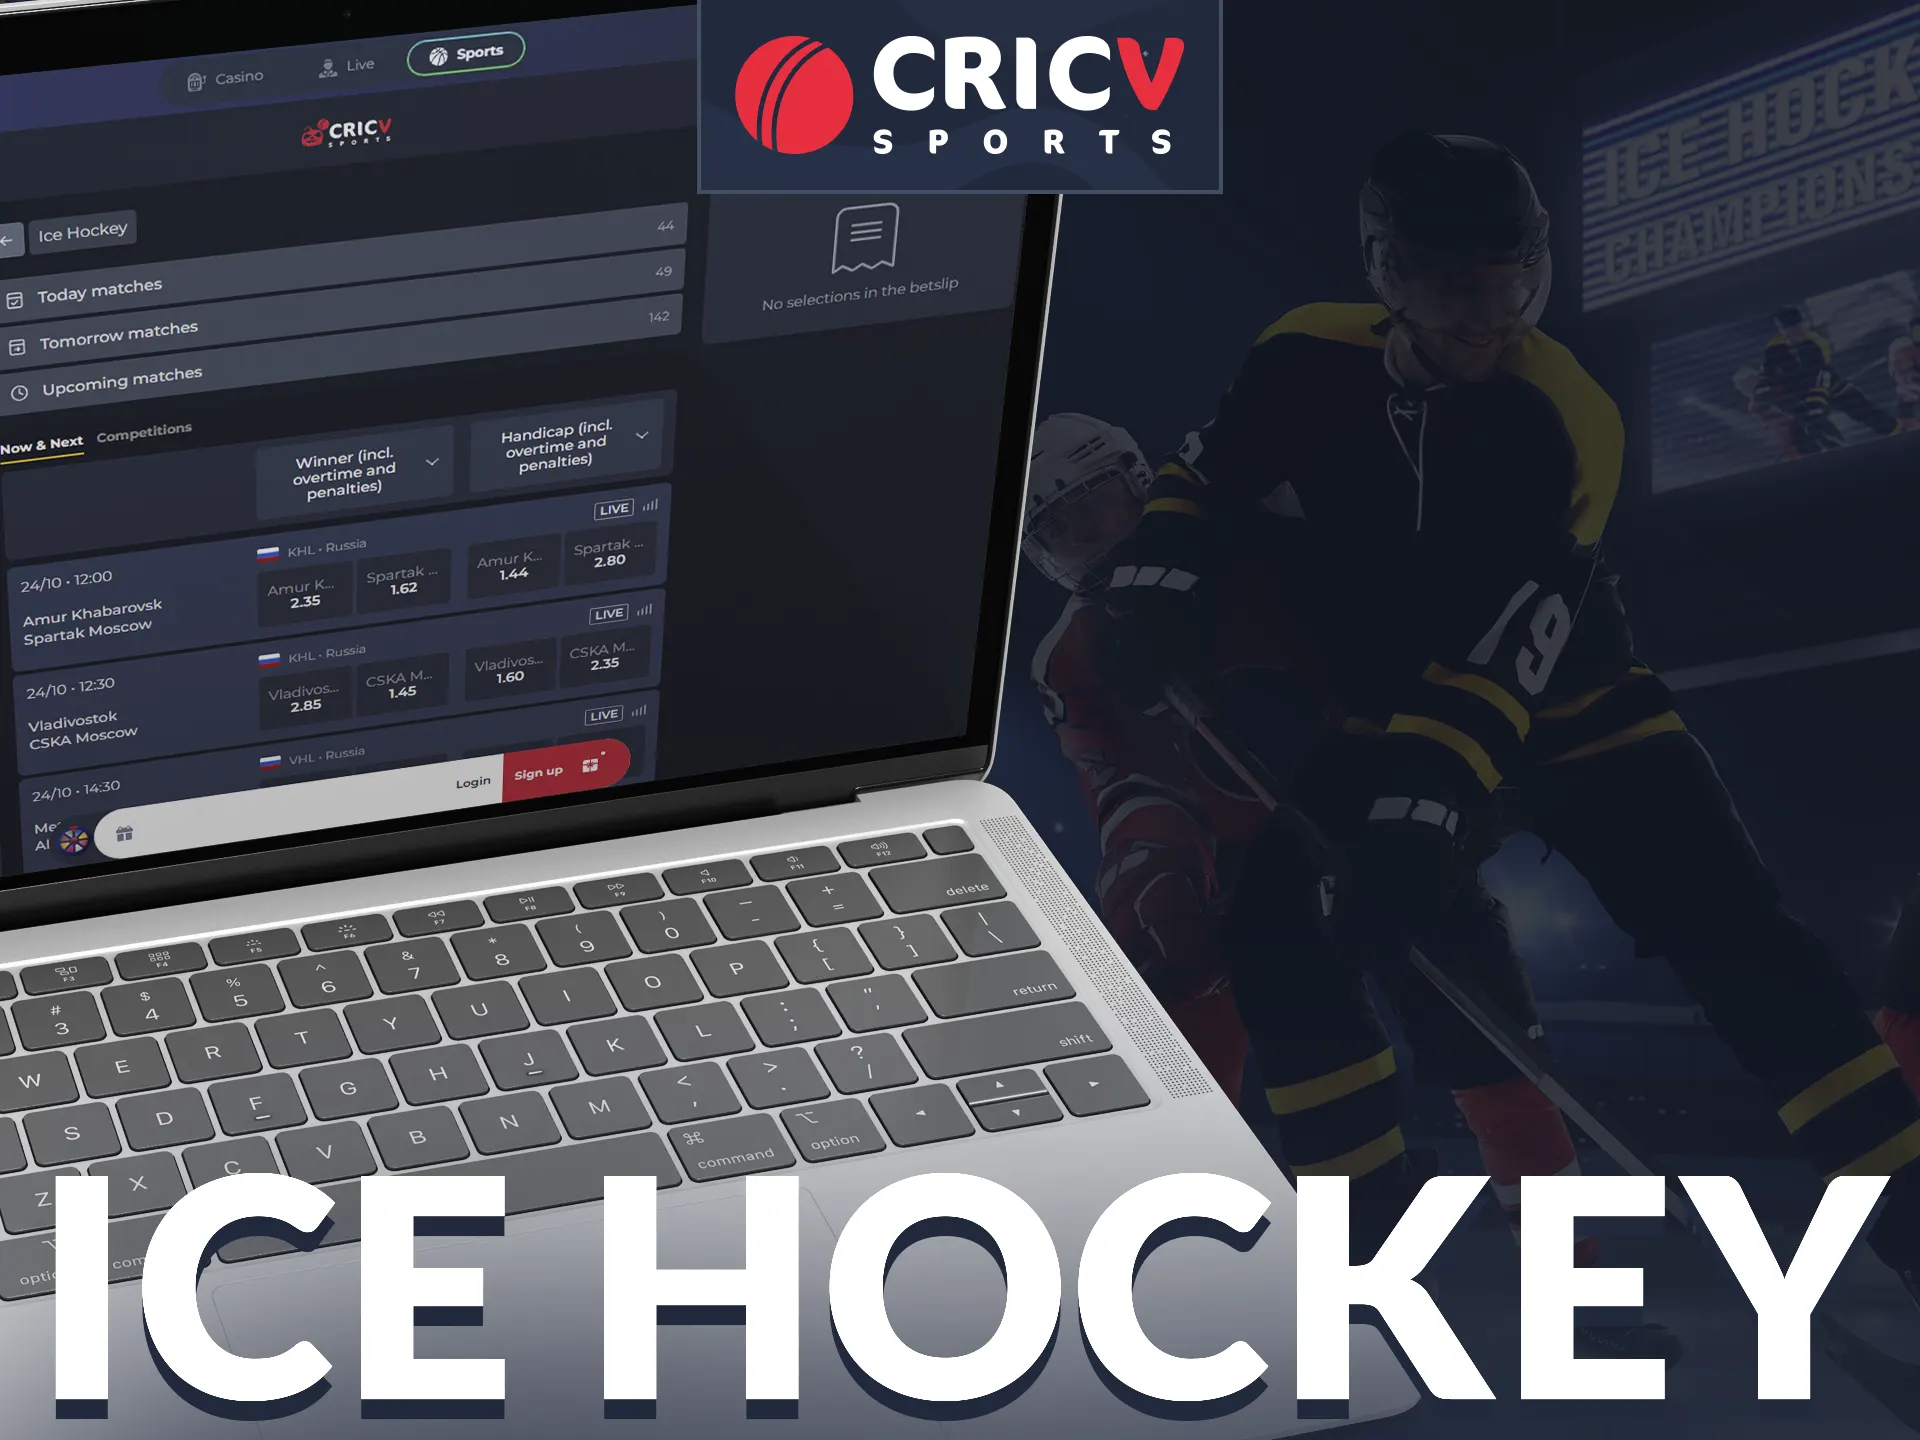 Bet on ice hockey with Cricv.